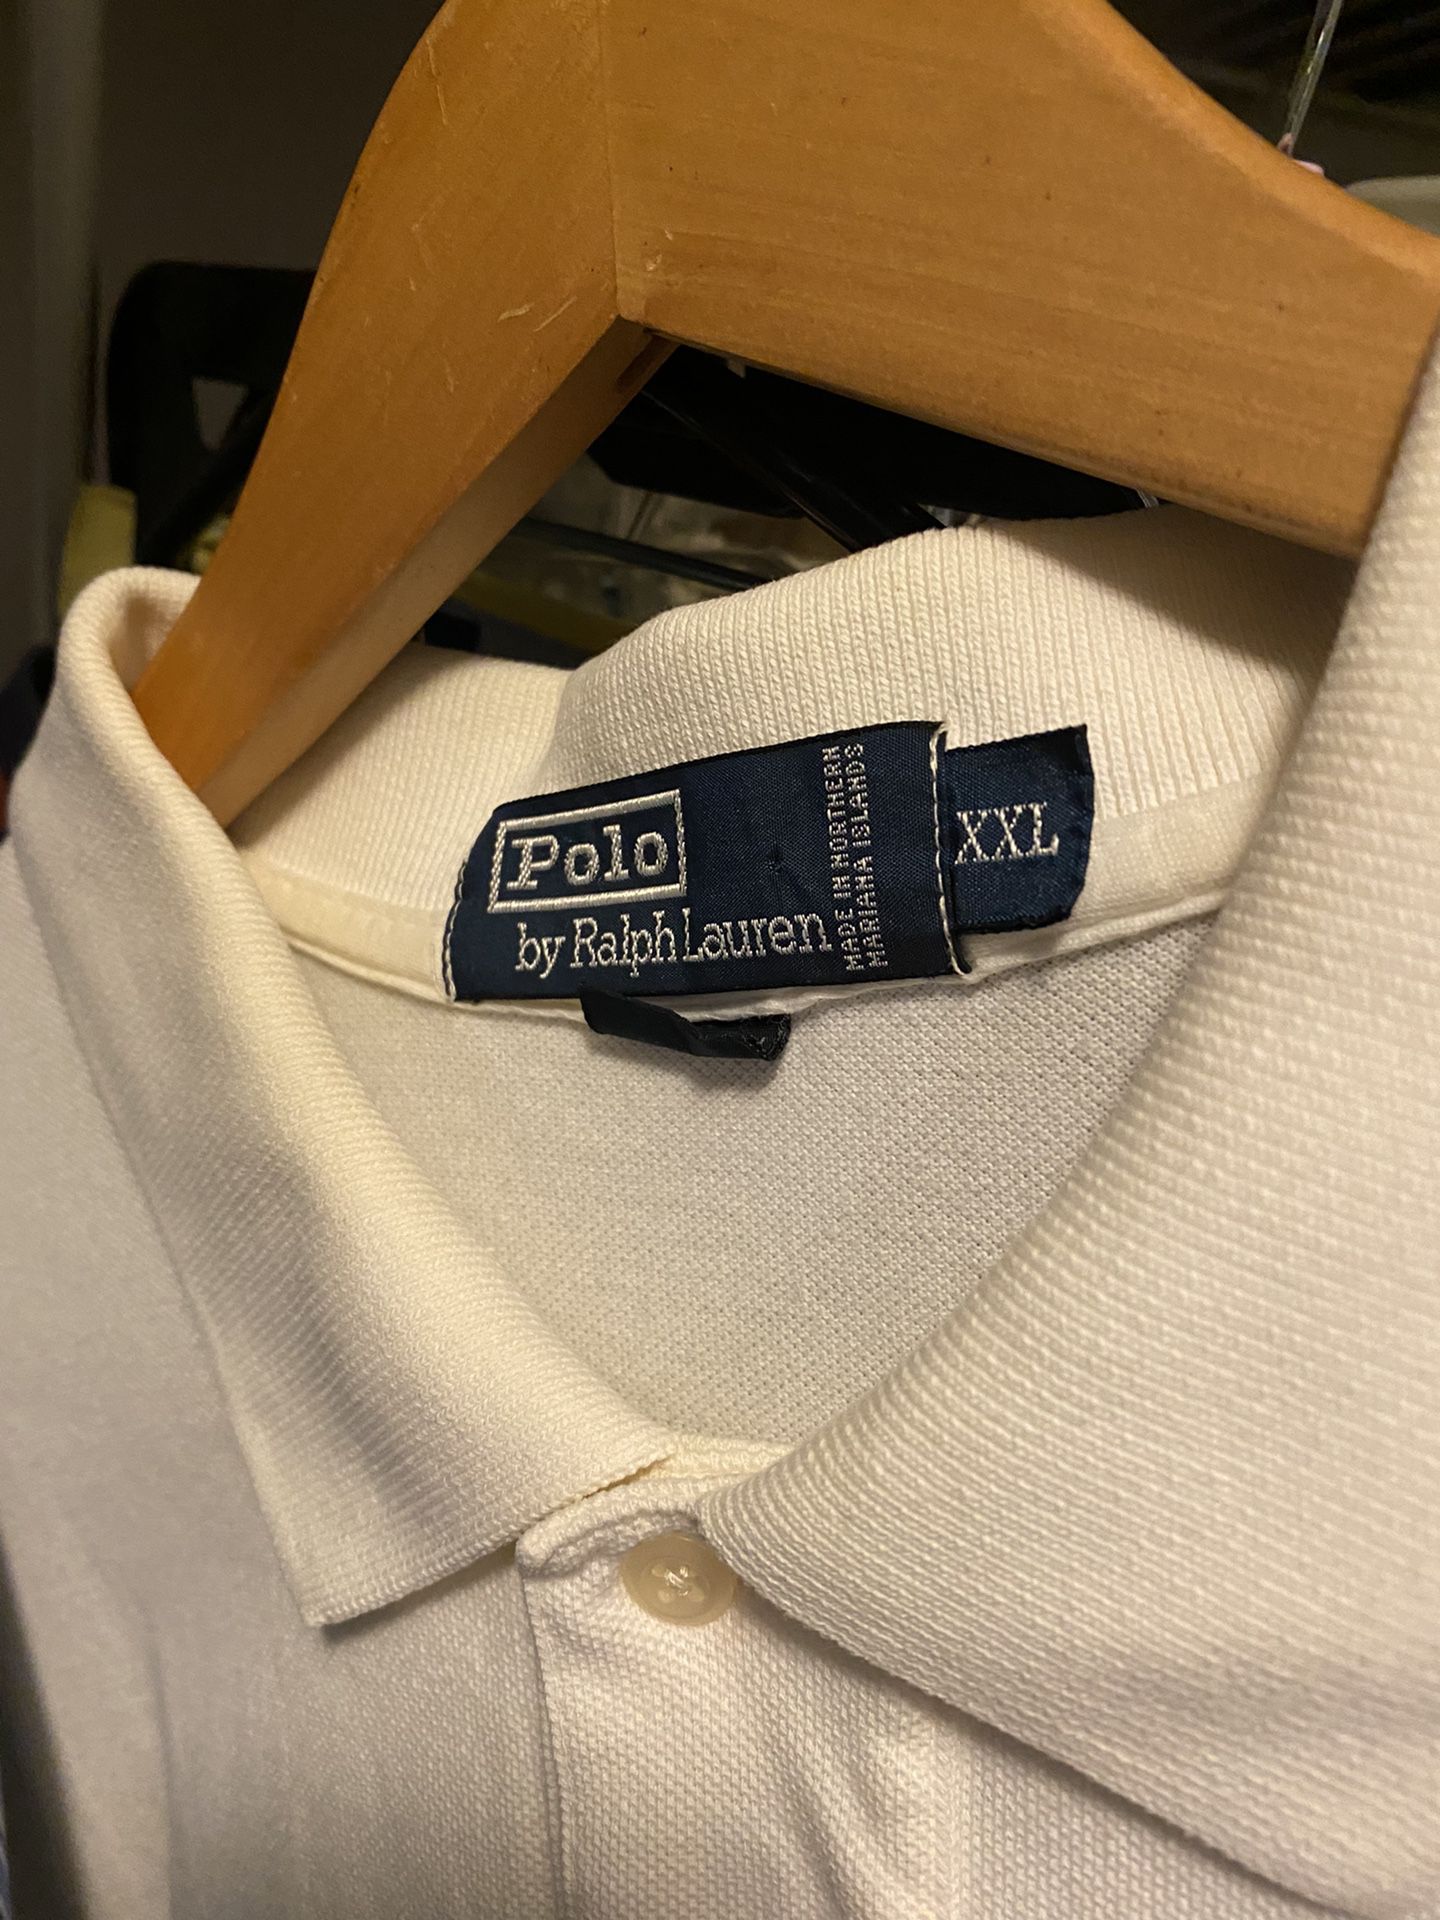 Ralph Lauren Polo Men’s 2XL Shirts - Buy 1 Get 1 Free 